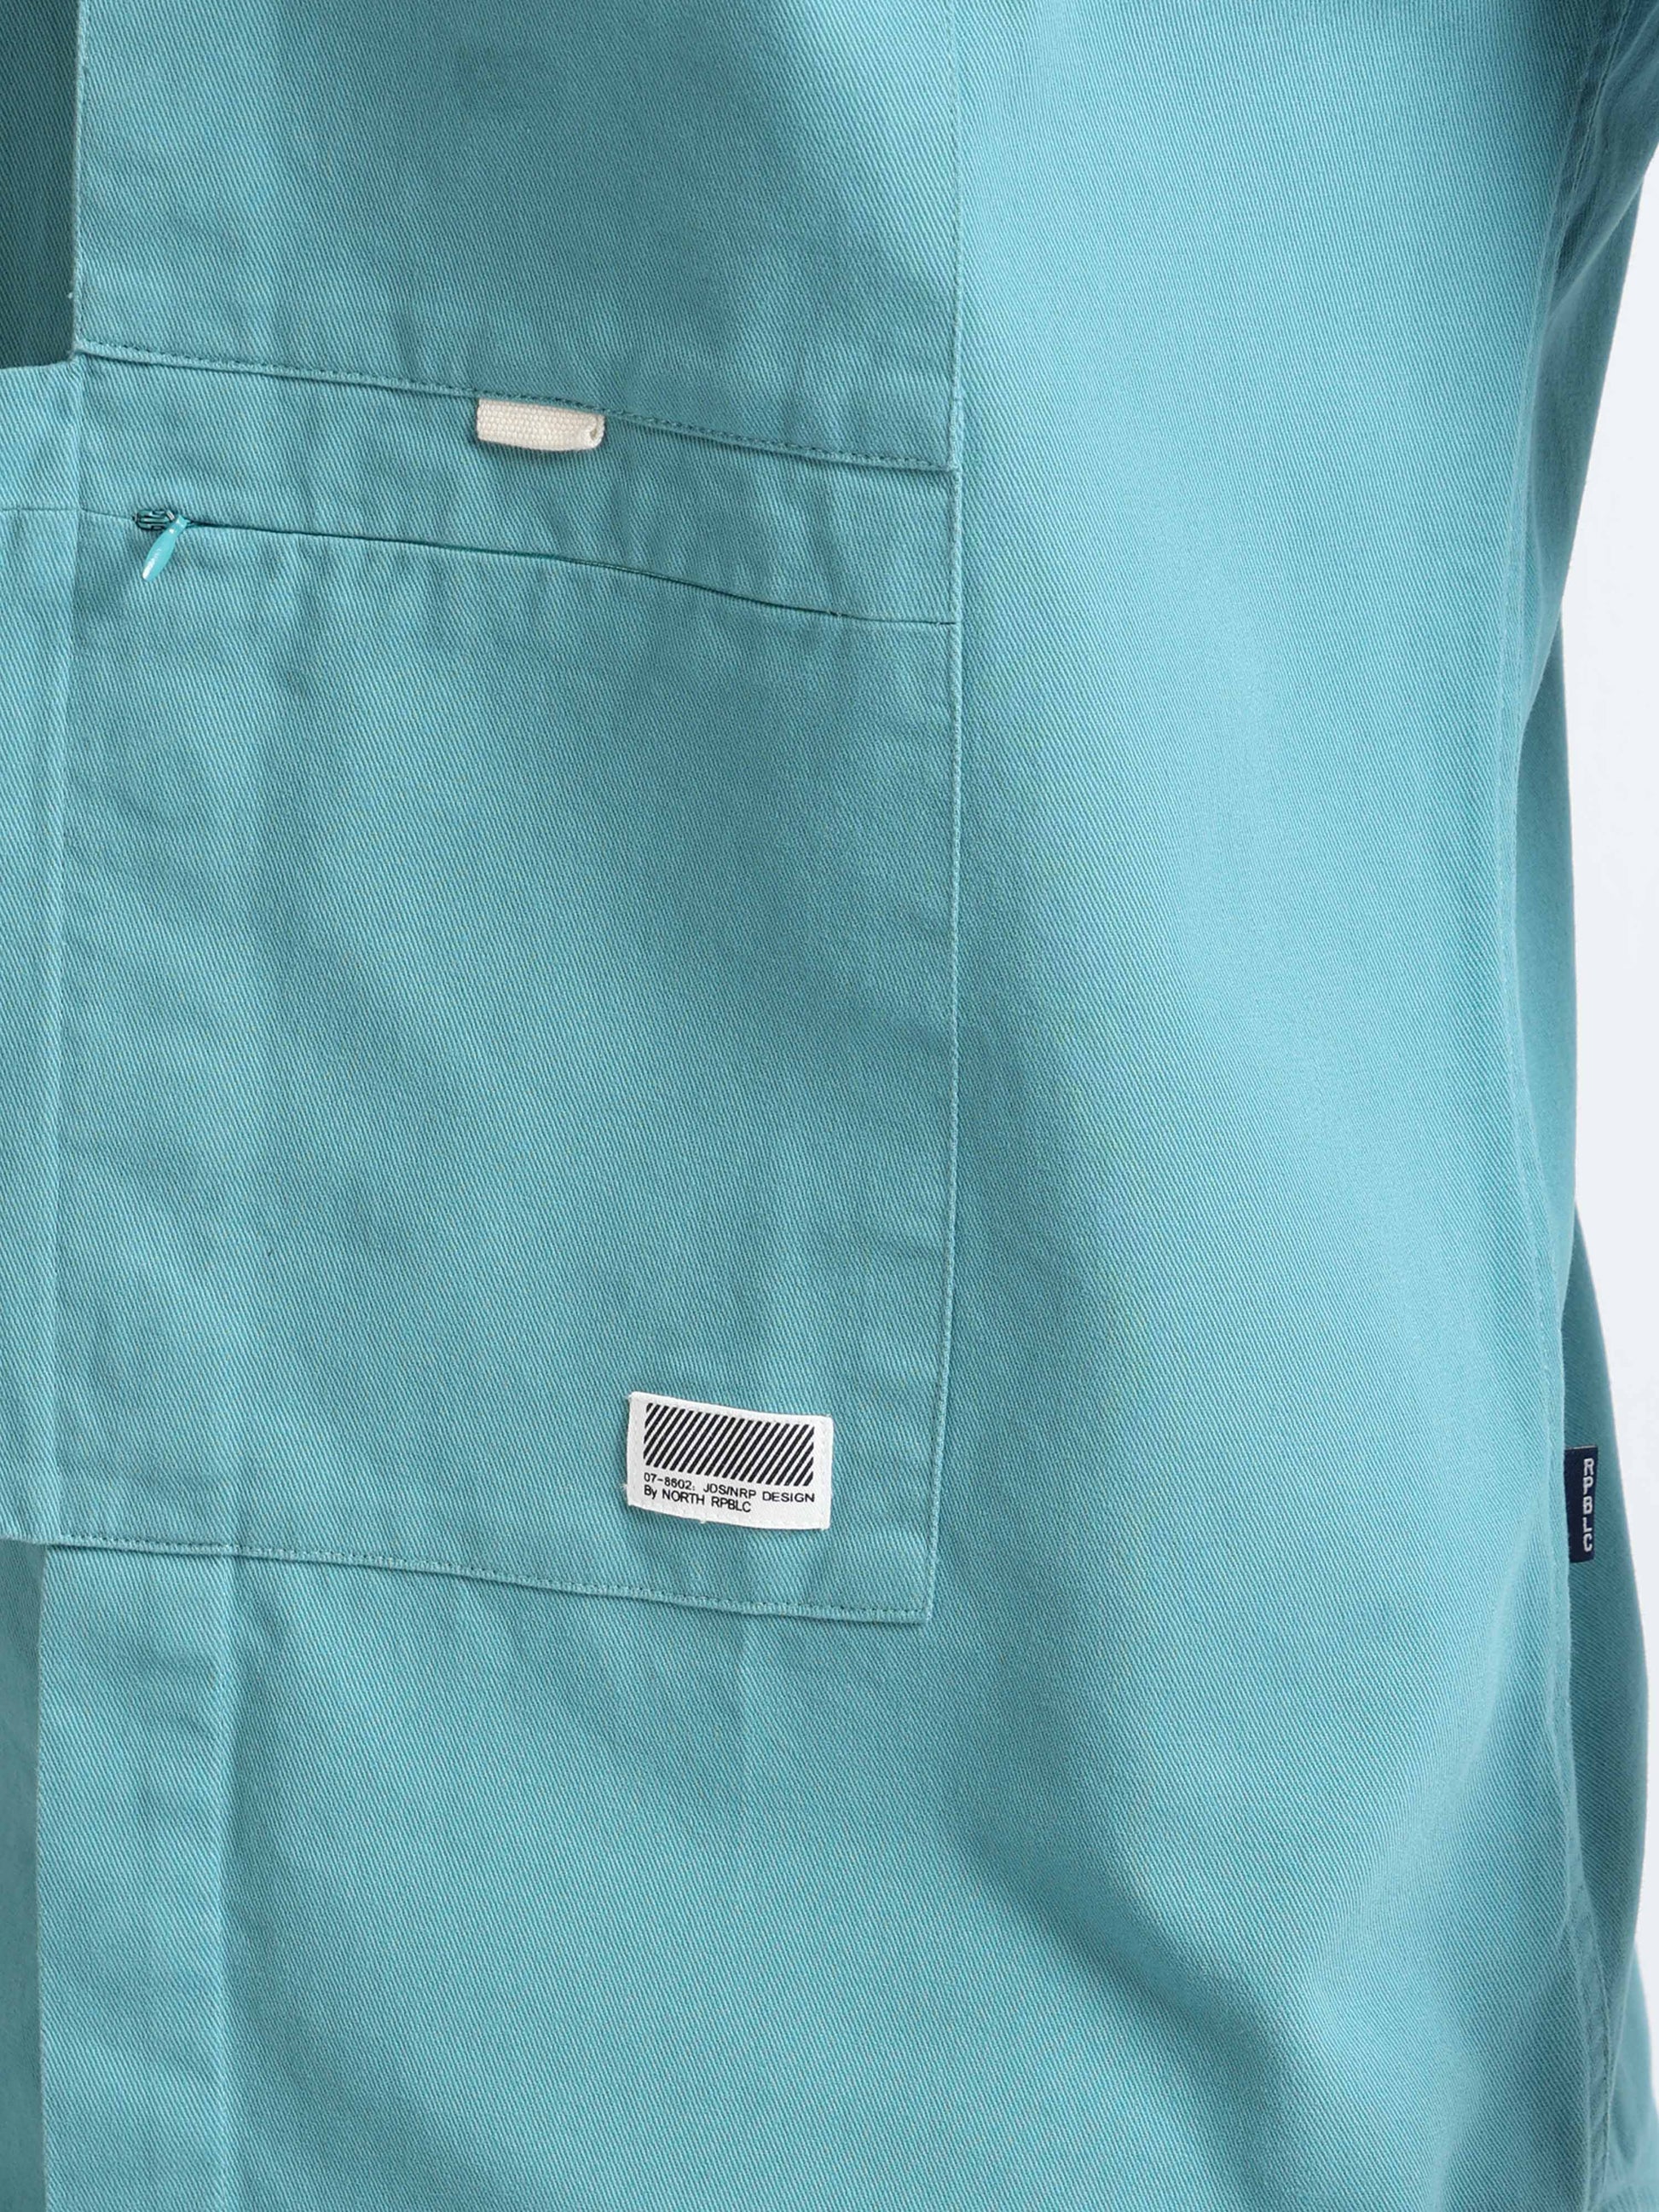 Buy Tacal Cargo Pocket Work Mens Stylish Shirt Online.